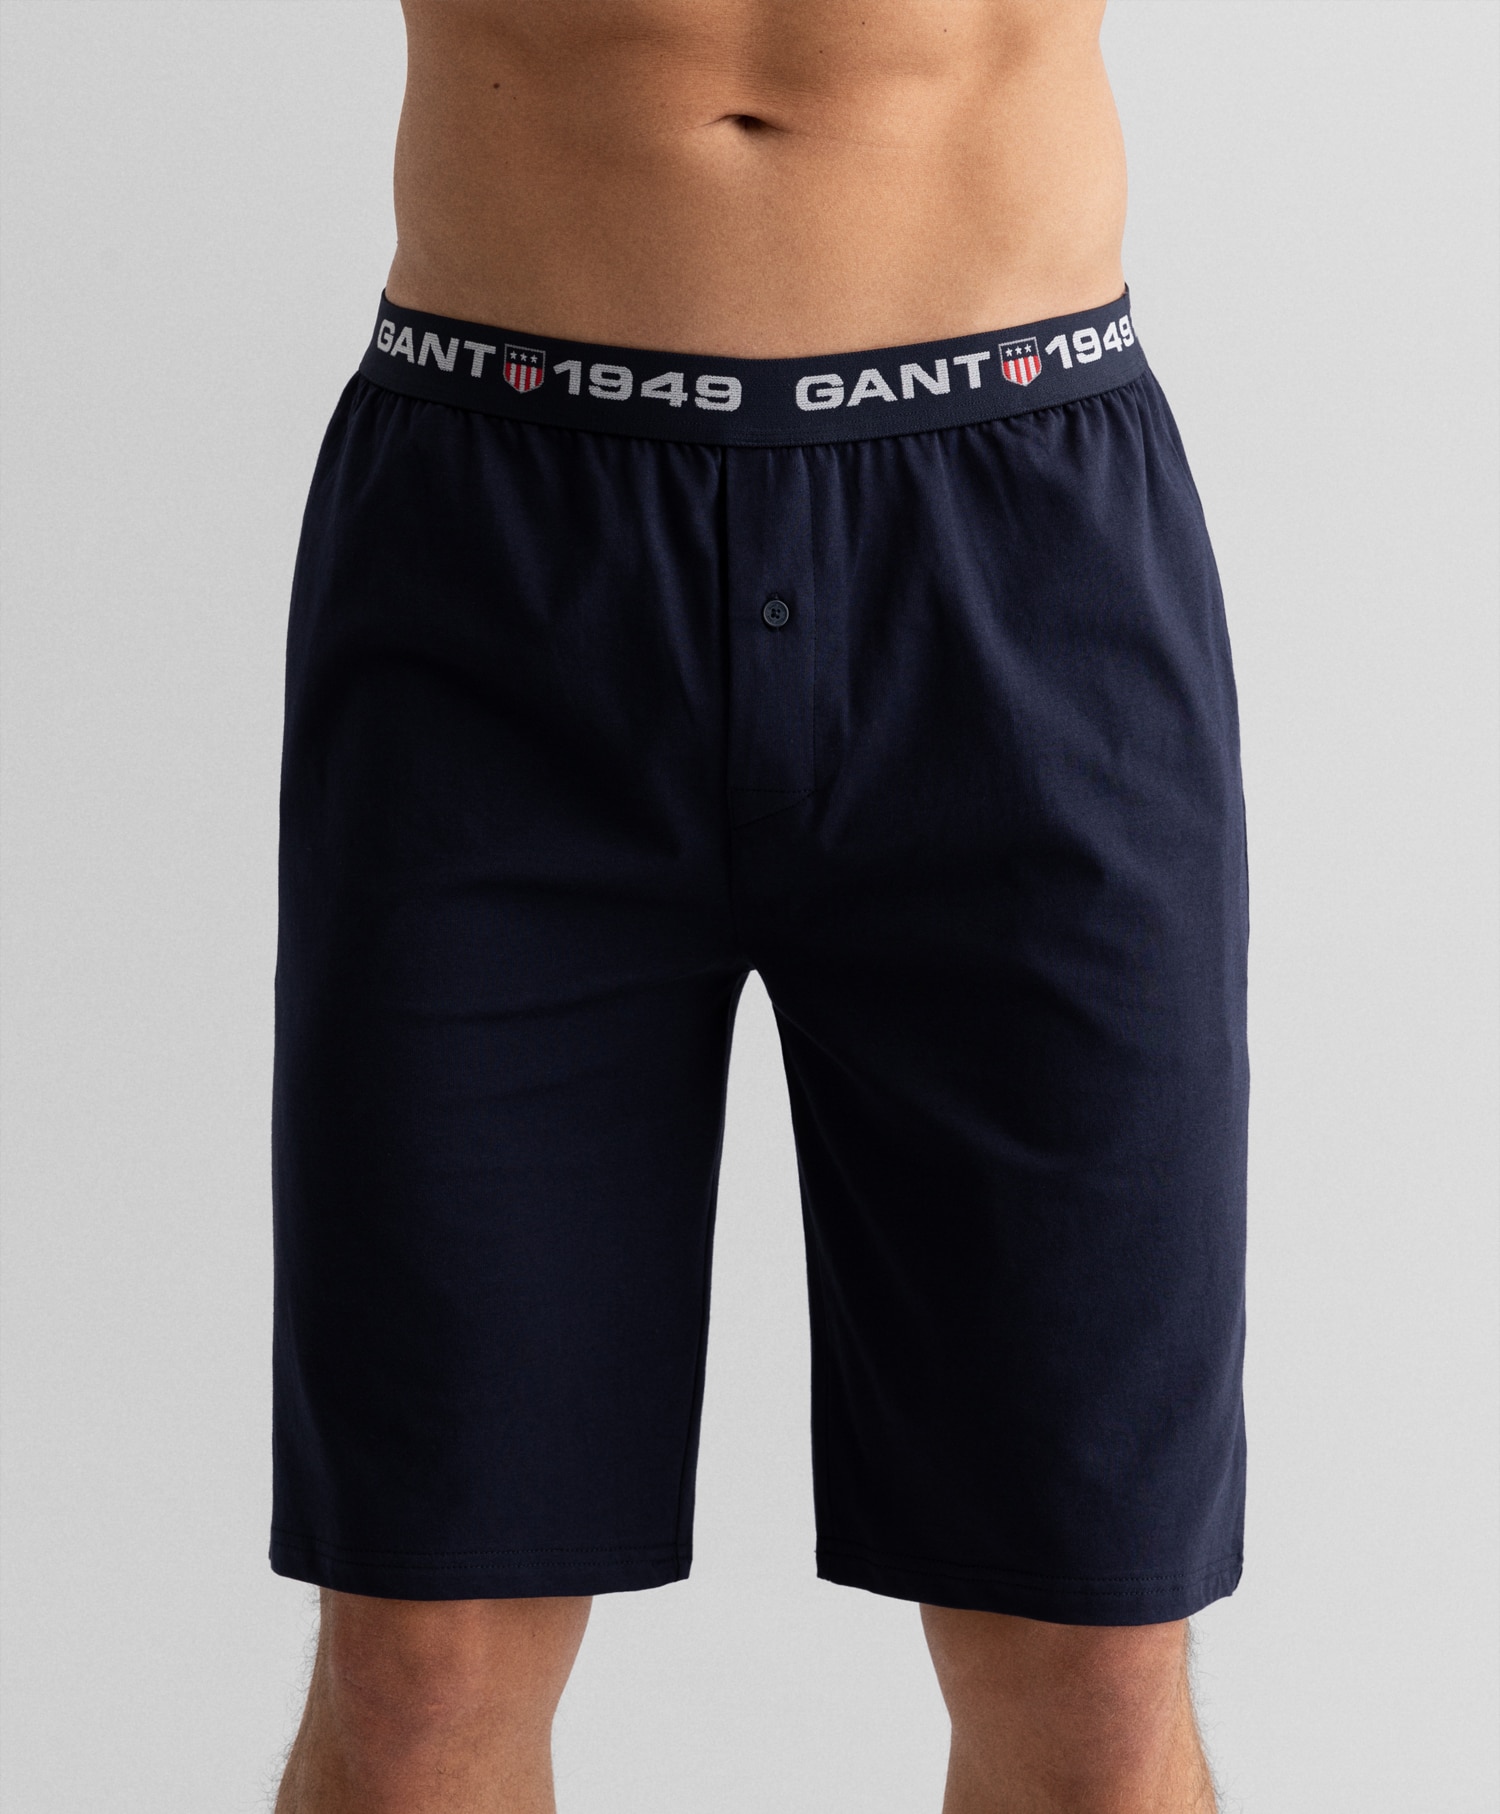 Gant Retro shield jersey shorts